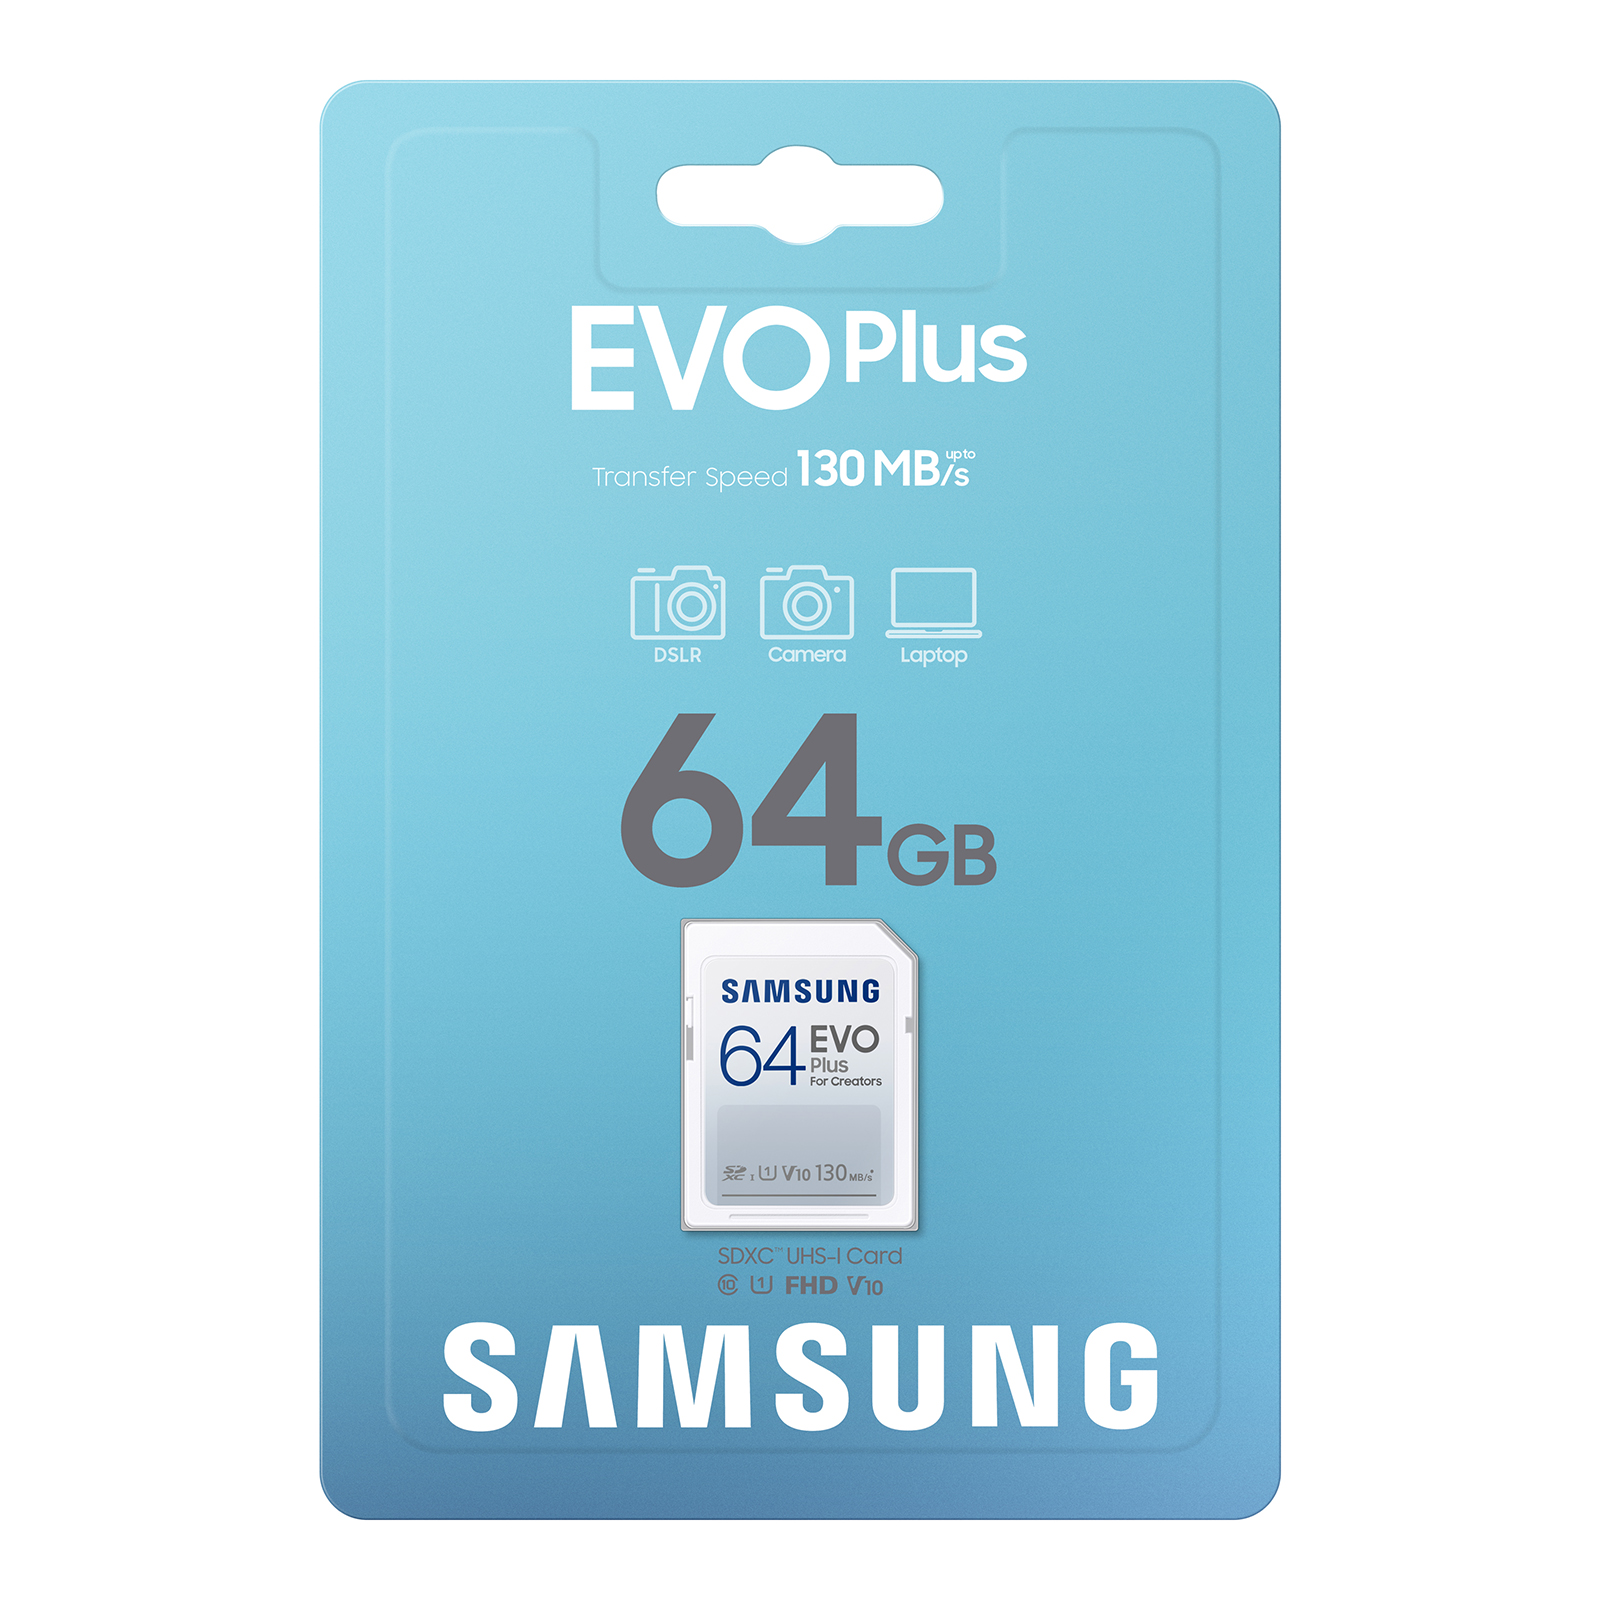 calorie Over instelling Delegeren Samsung SD Card EVO Plus (64GB) | ITGマーケティング - Samsung SSD / microSD  の国内正規品取扱代理店 - 法人直販サイト ITG Direct